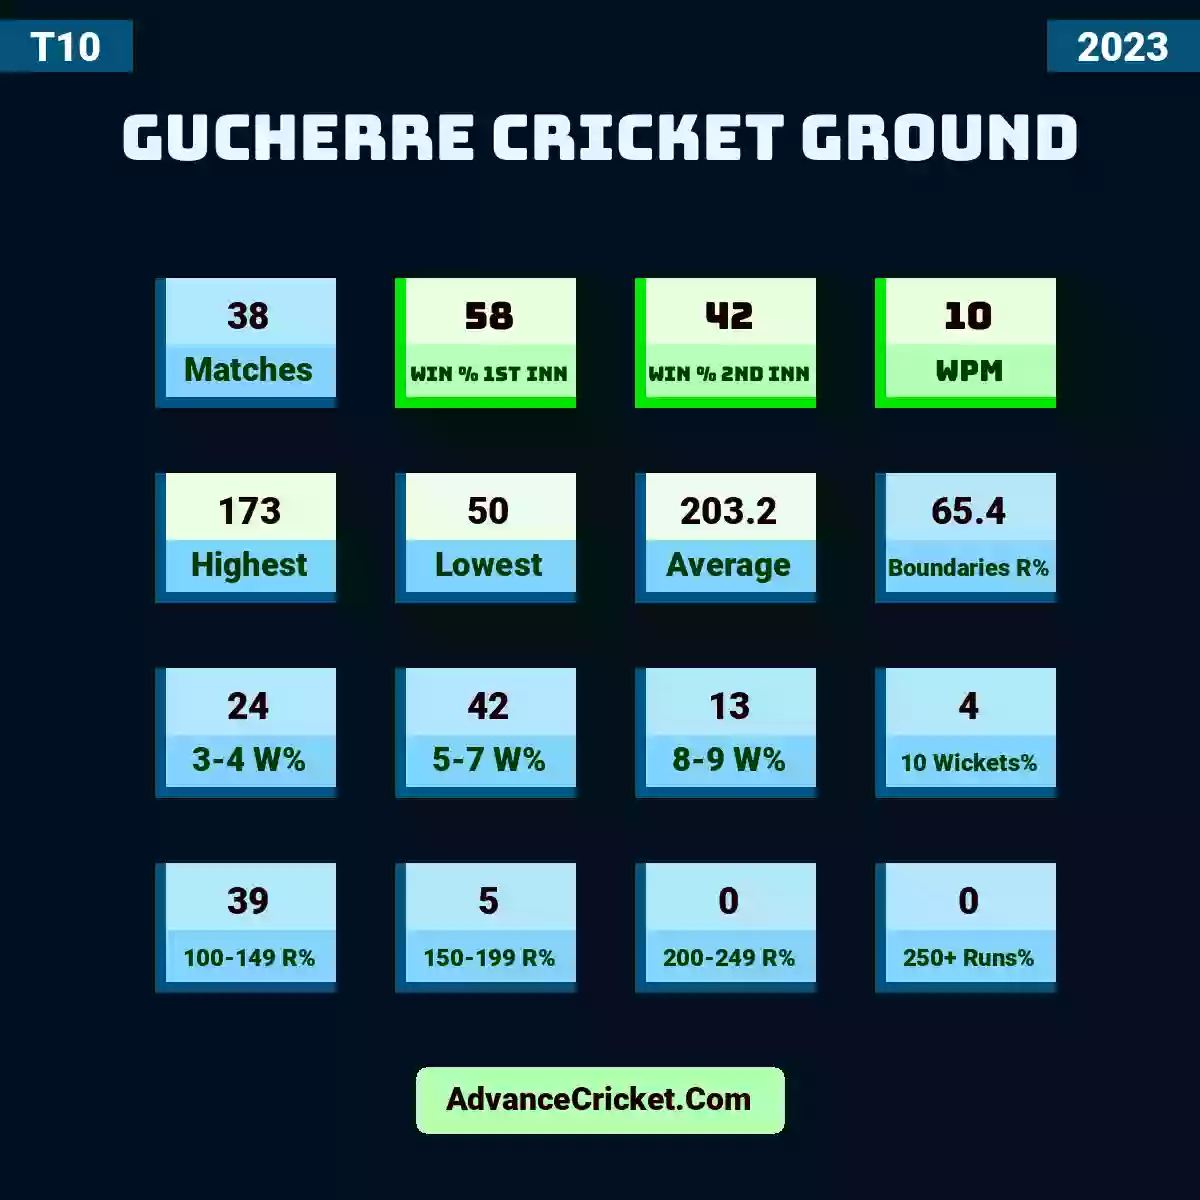 Image showing Gucherre Cricket Ground with Matches: 38, Win % 1st Inn: 58, Win % 2nd Inn: 42, WPM: 10, Highest: 173, Lowest: 50, Average: 203.2, Boundaries R%: 65.4, 3-4 W%: 24, 5-7 W%: 42, 8-9 W%: 13, 10 Wickets%: 4, 100-149 R%: 39, 150-199 R%: 5, 200-249 R%: 0, 250+ Runs%: 0.